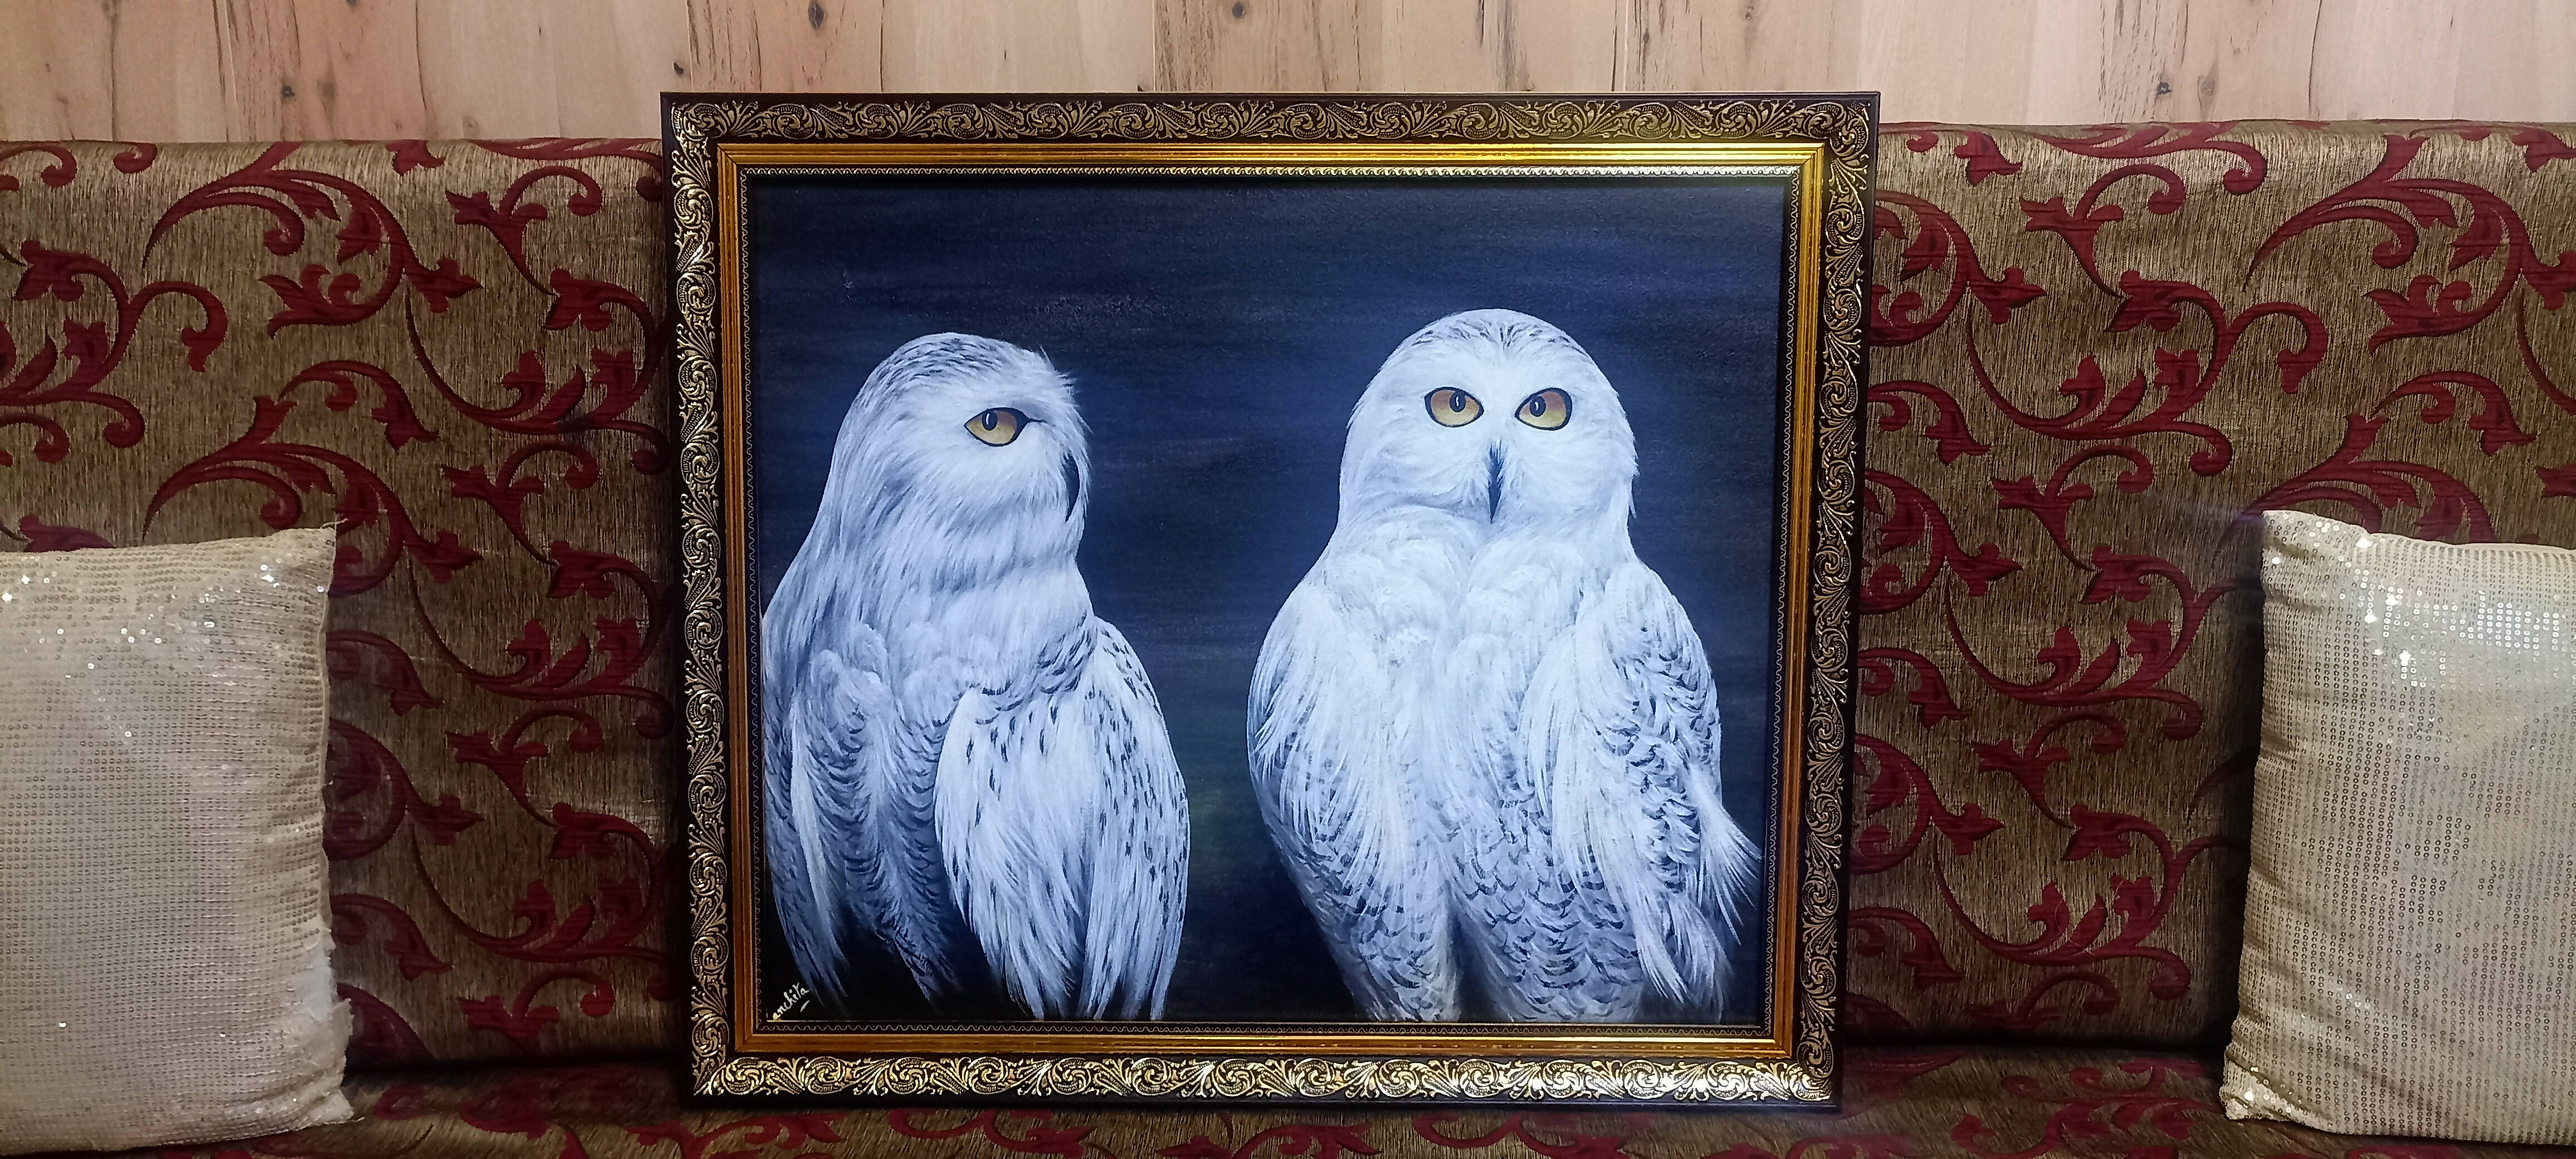 White owls